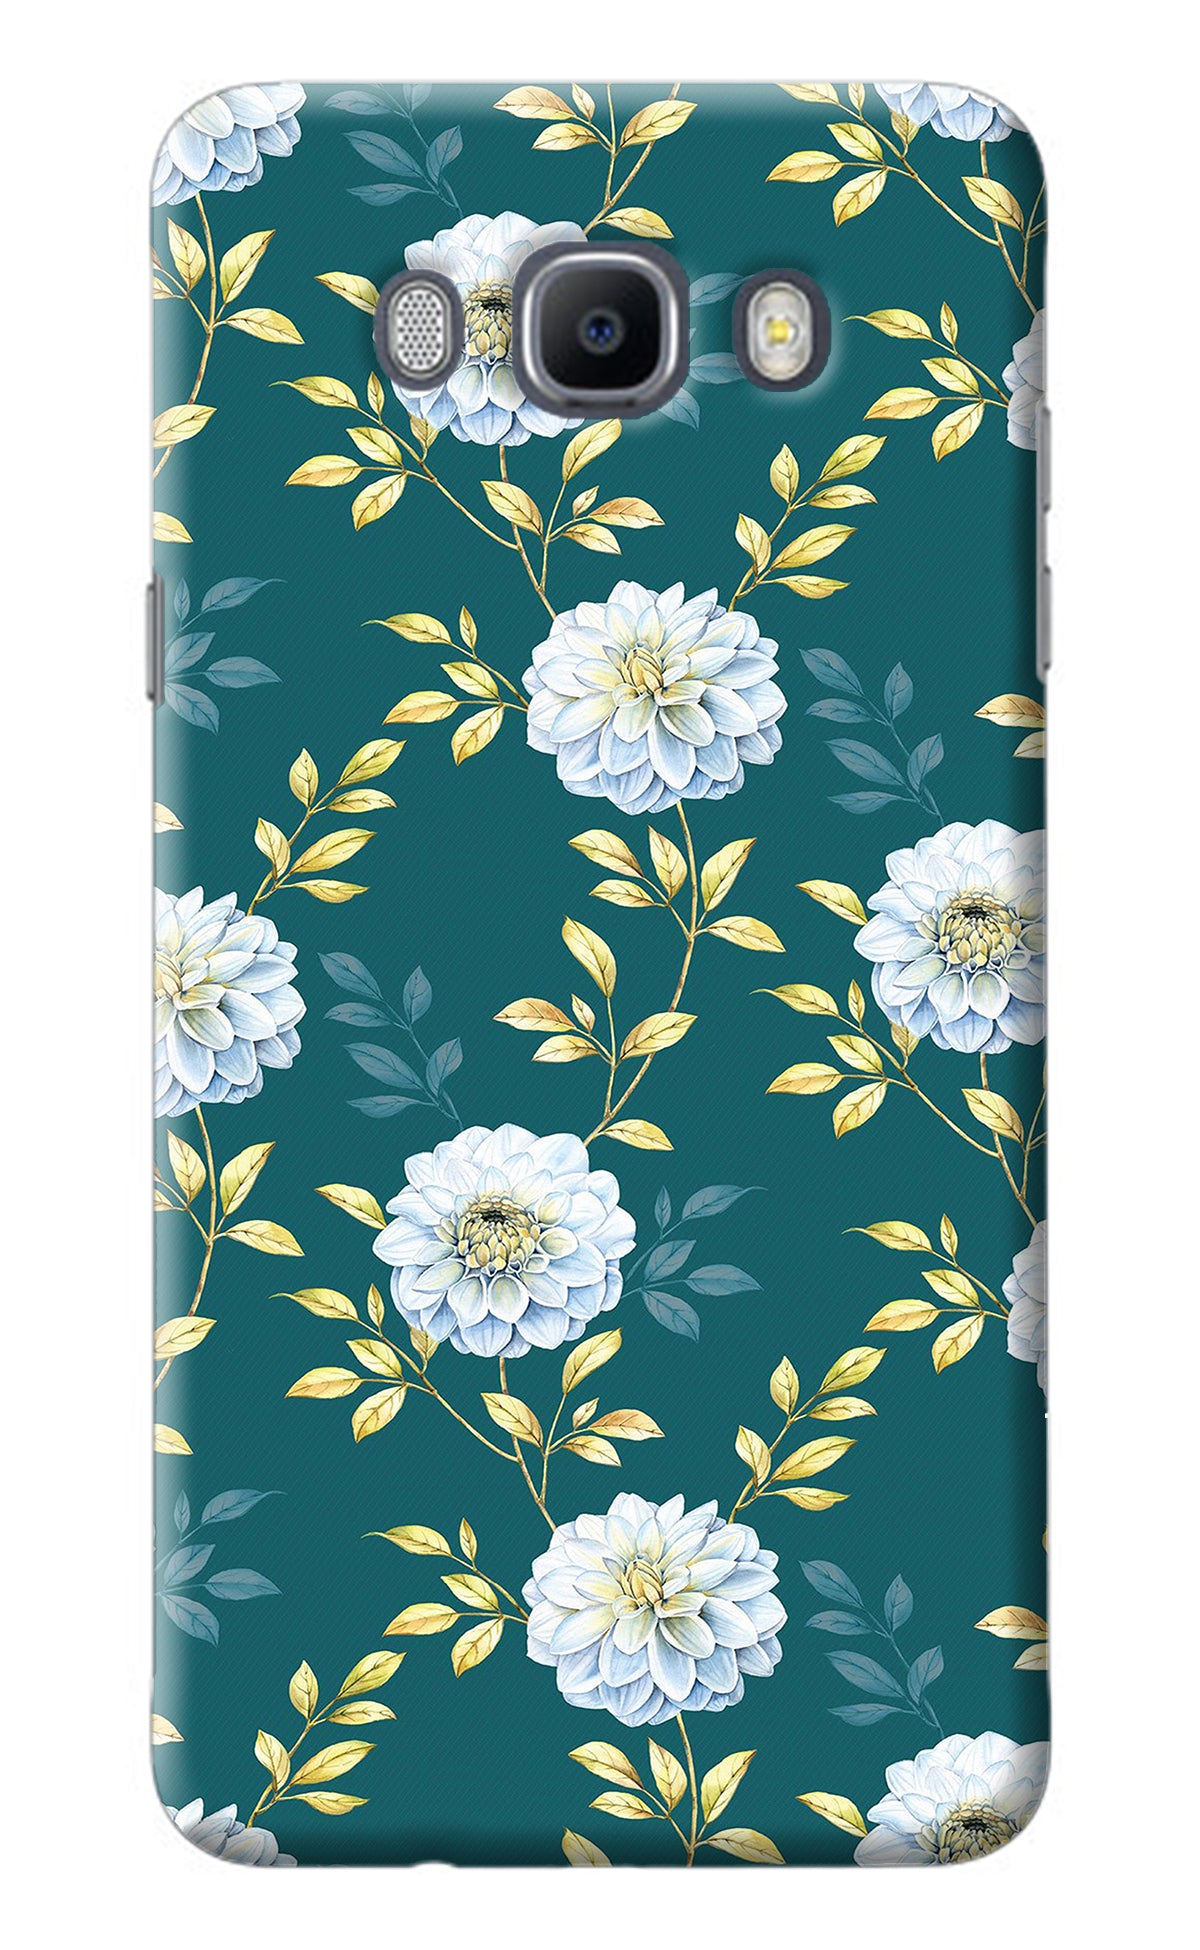 Flowers Samsung J7 2016 Back Cover